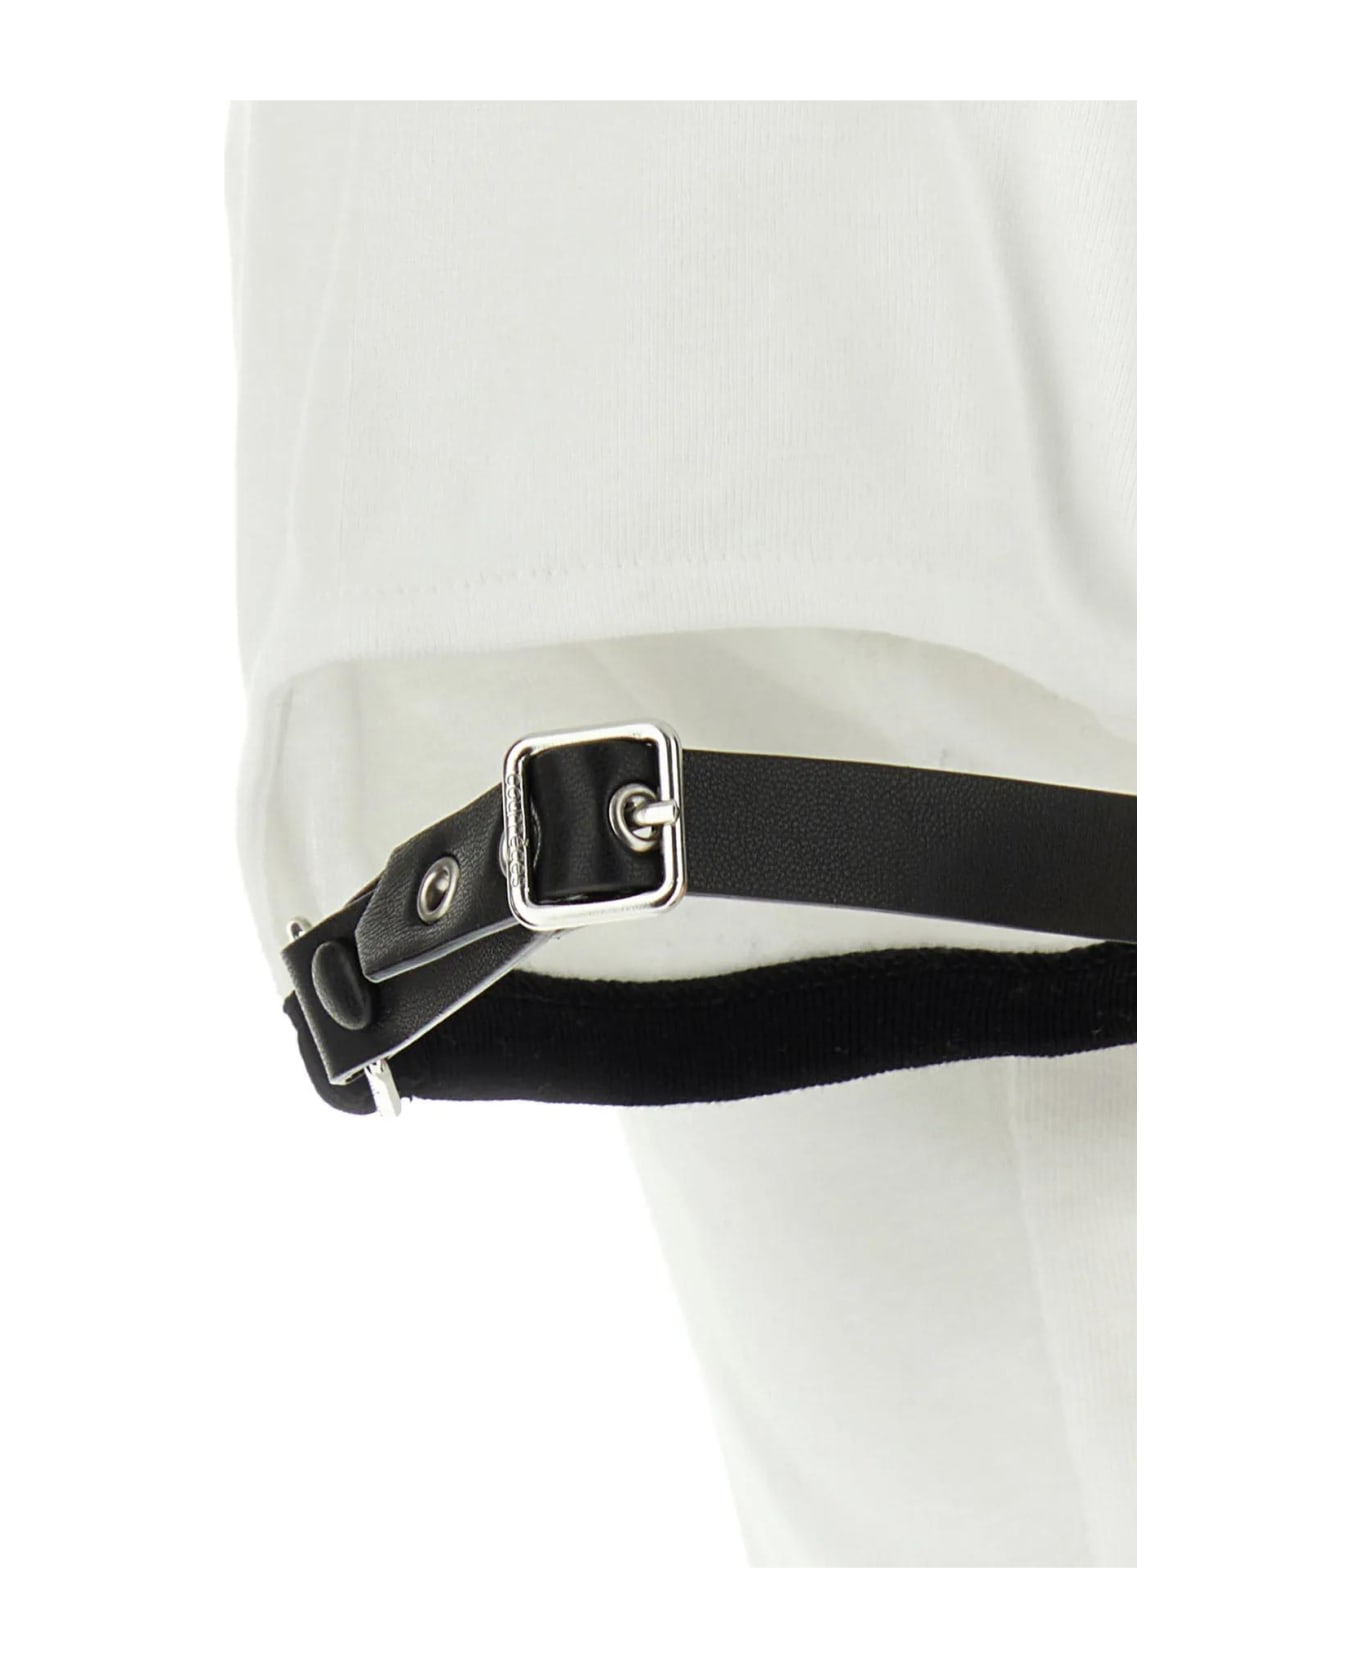 Courrèges White Cotton T-shirt - WHITE/BLACK Tシャツ